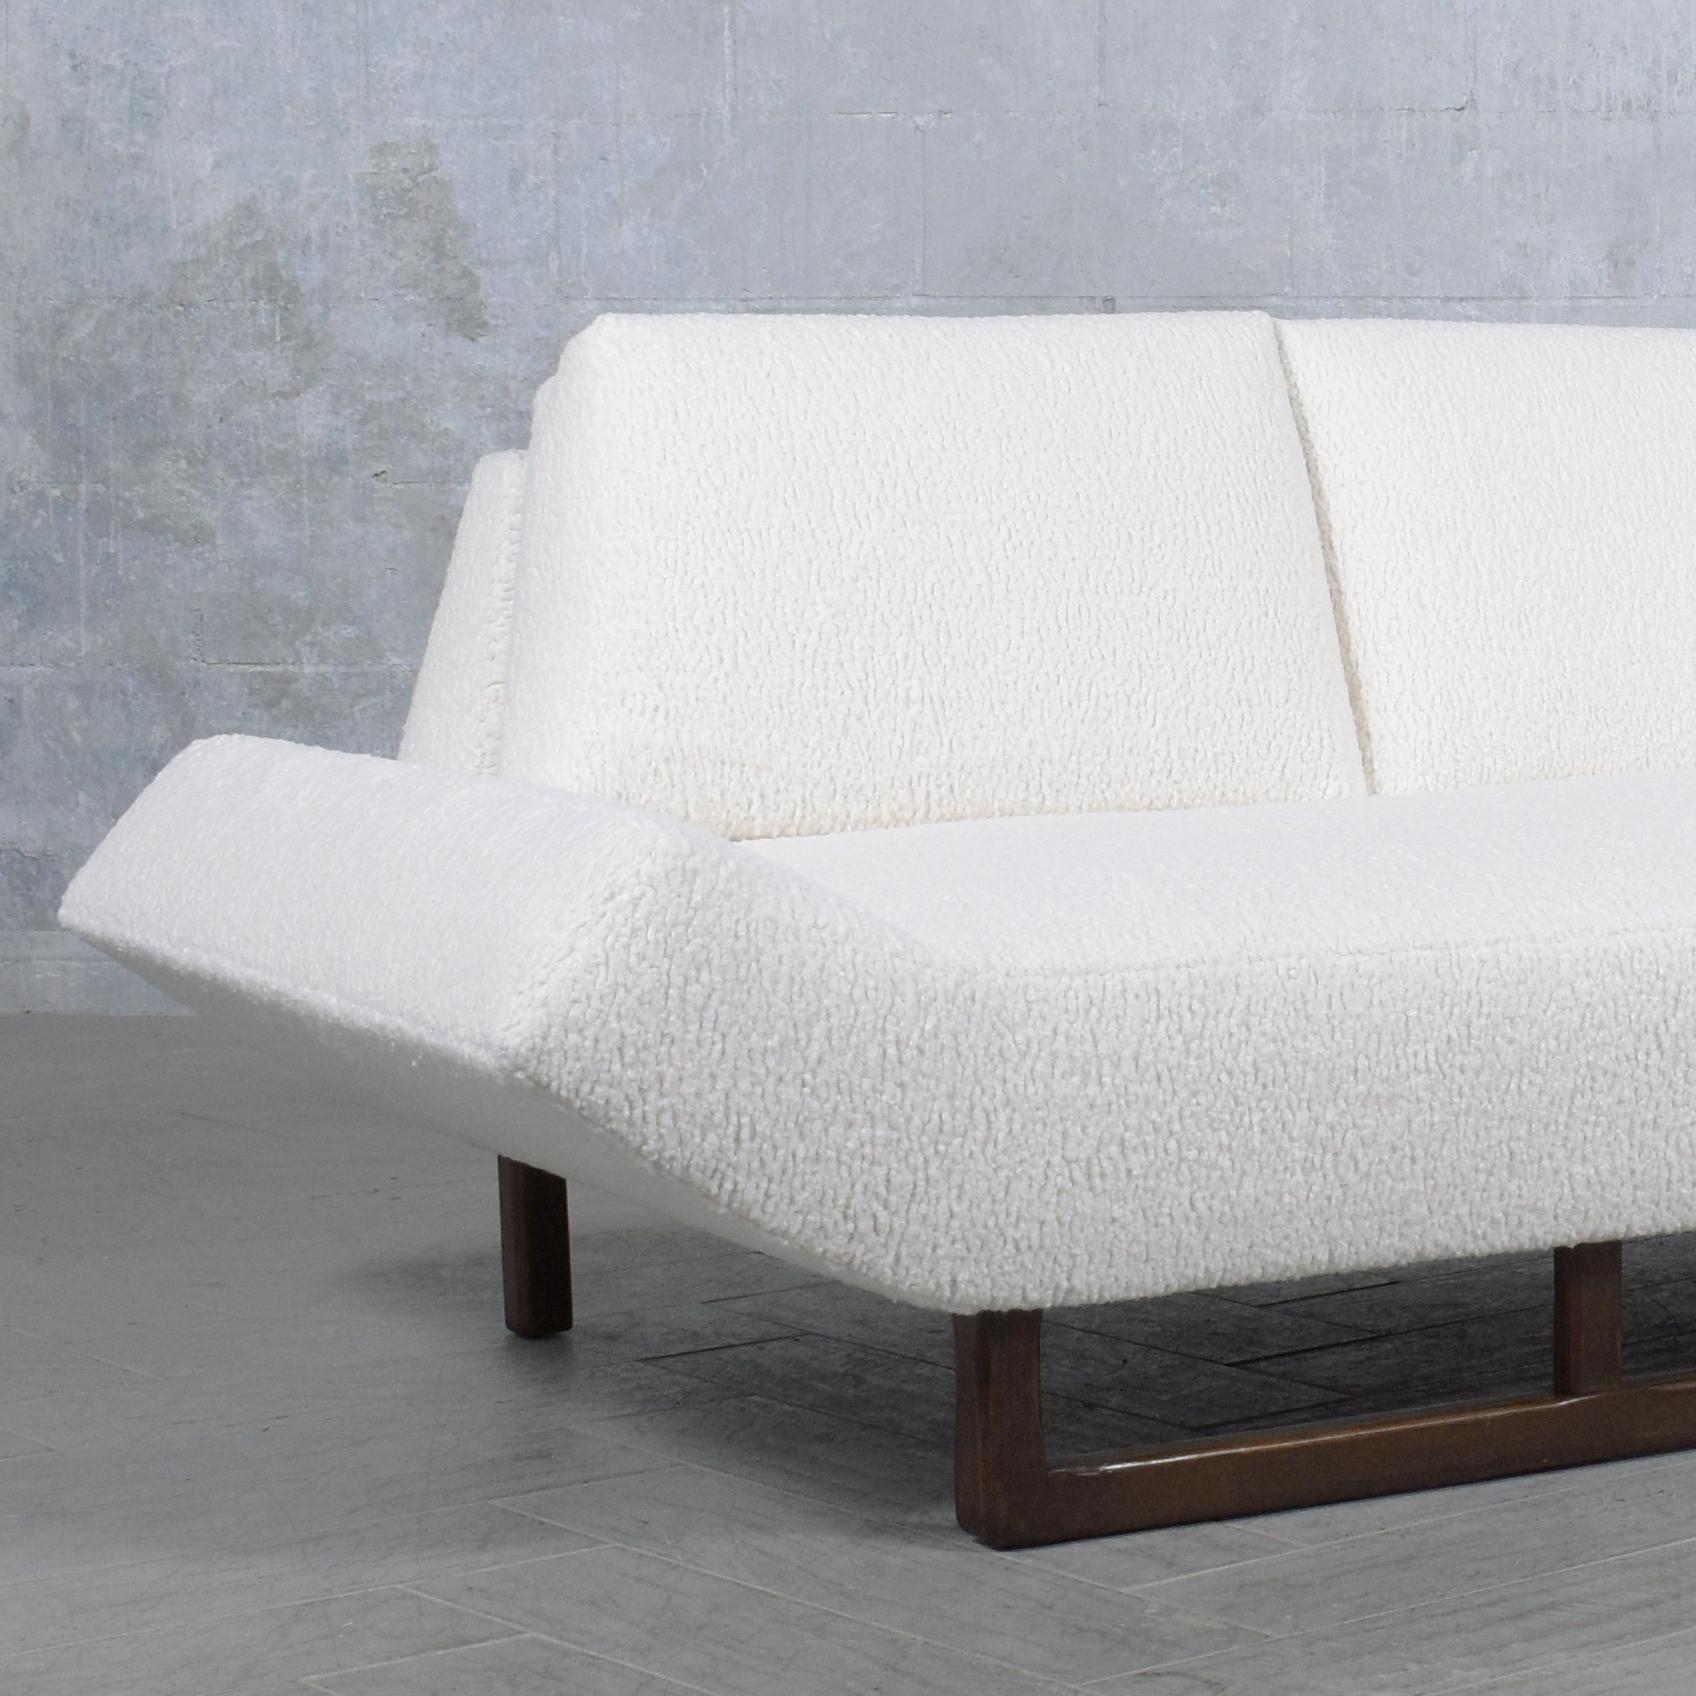 Vintage Mid-Century Sofa Restored: Classic Design Meets Modern Comfort 2